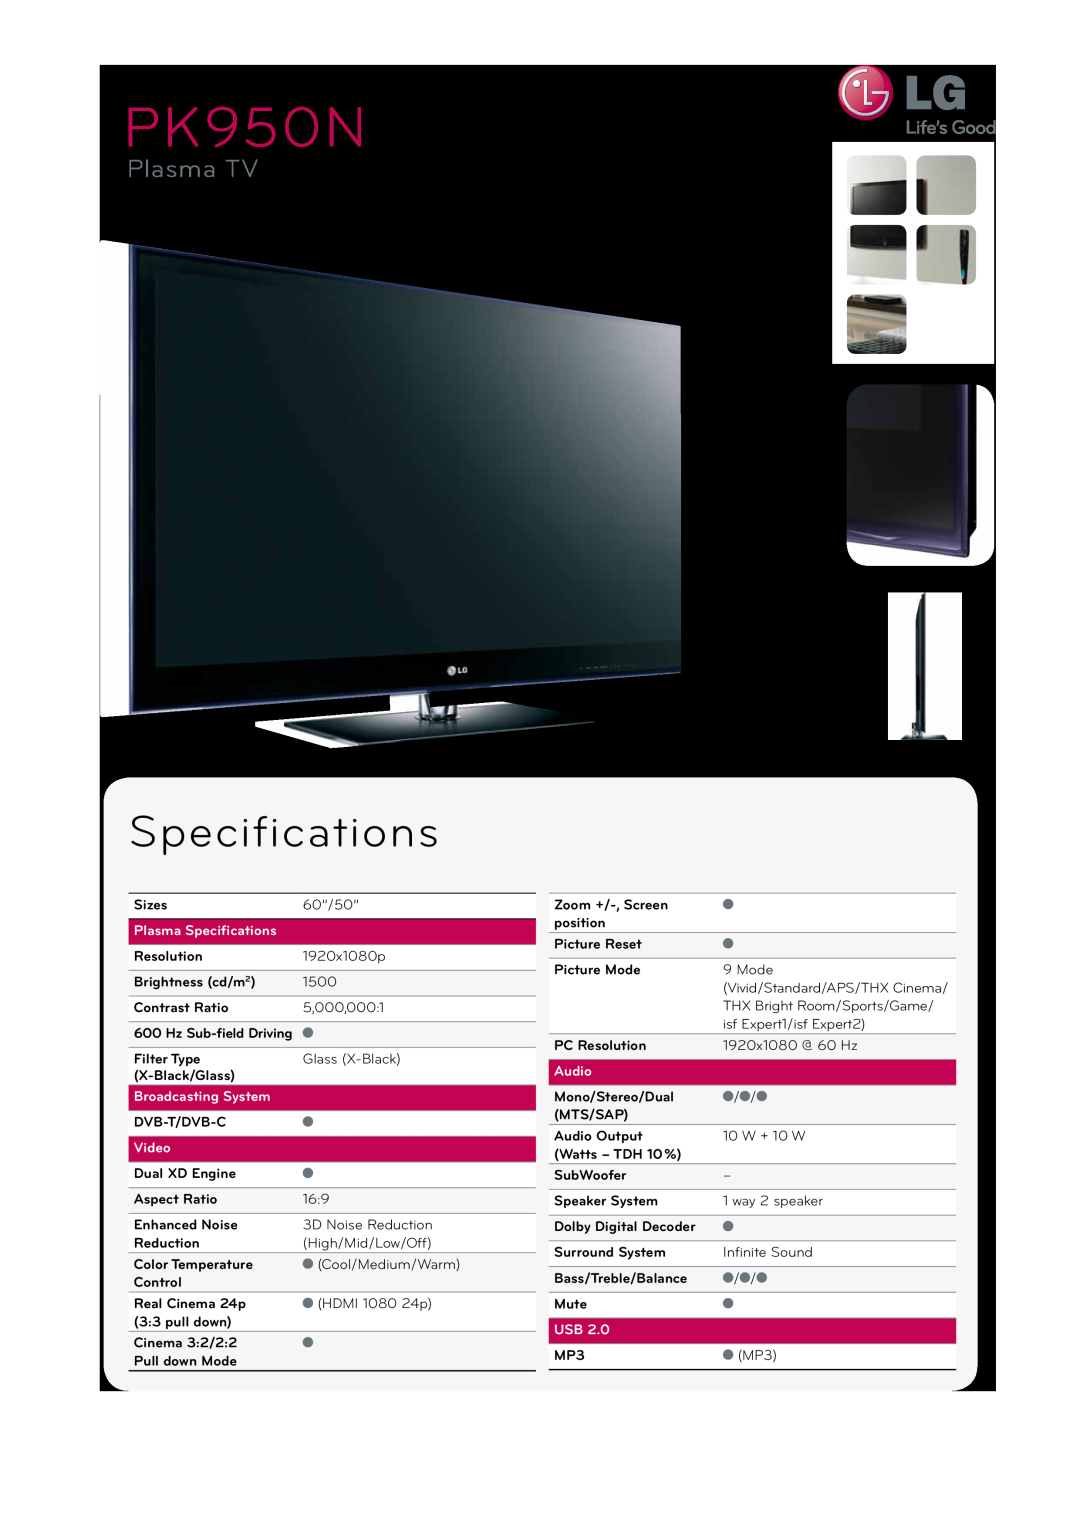 LG Electronics PK950N specifications Plasma Specifications, Broadcasting System, Video, Audio, Plasma TV 